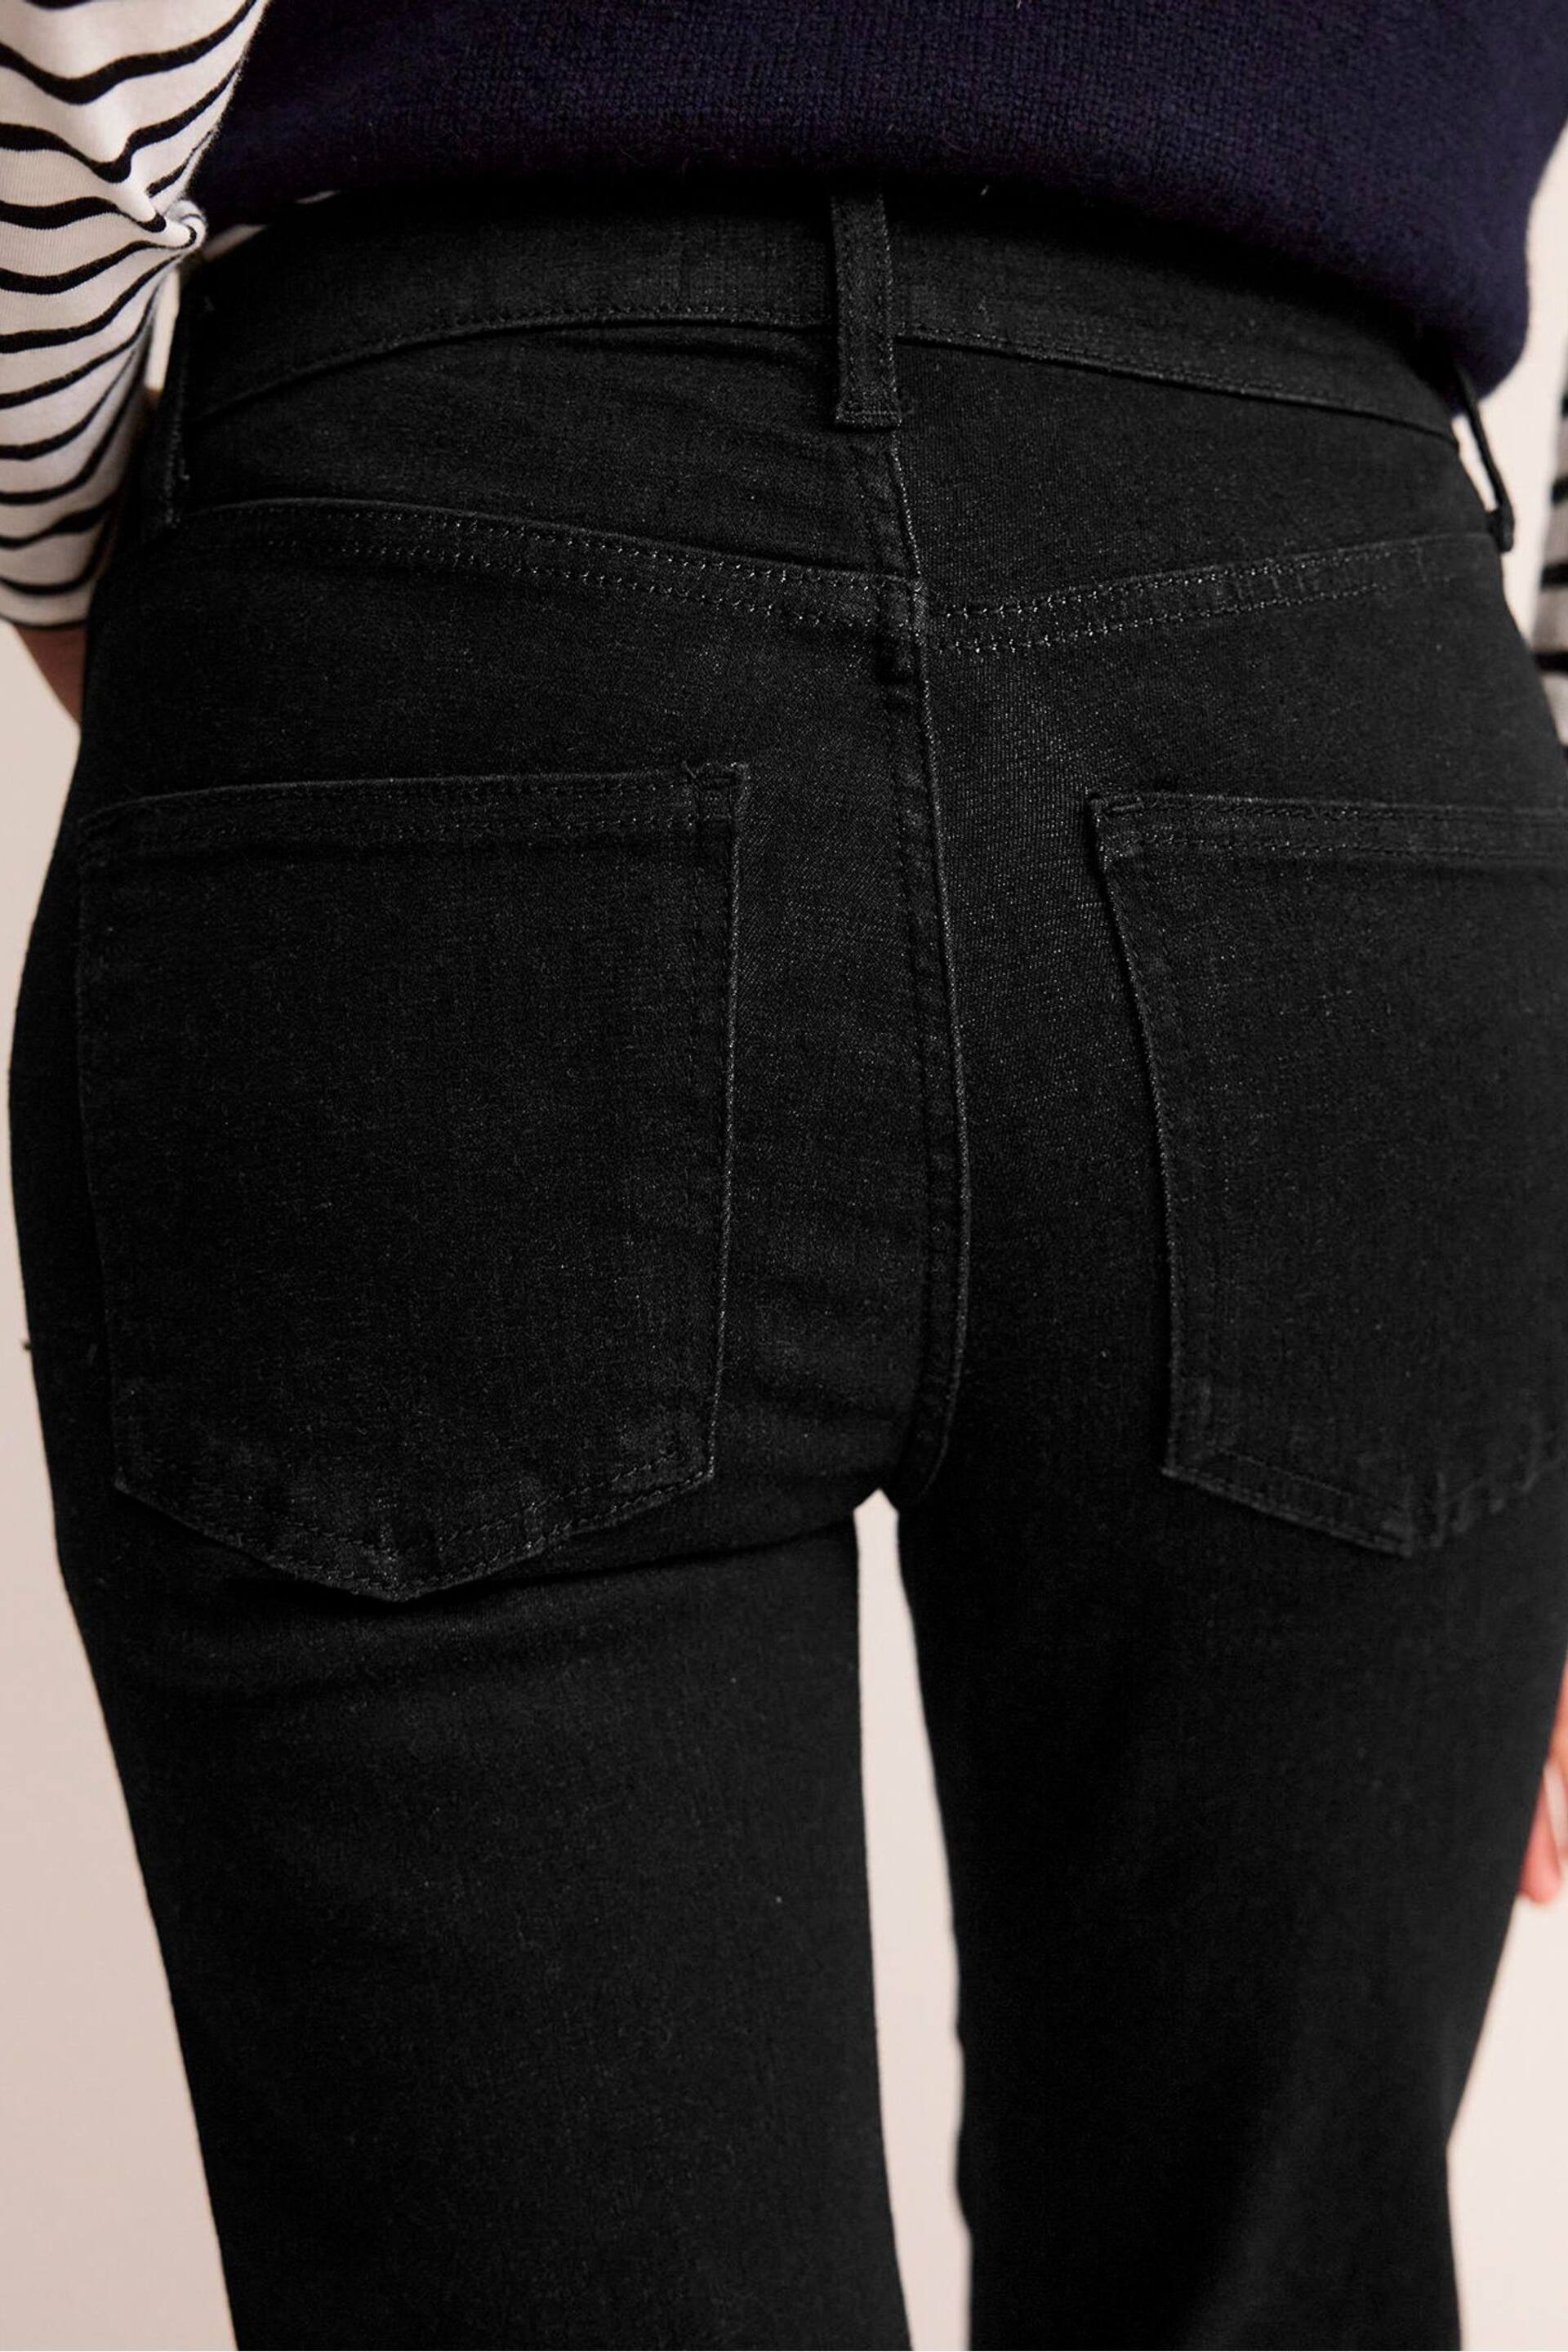 Boden Dark Black Mid Rise Slim Jeans - Image 5 of 5